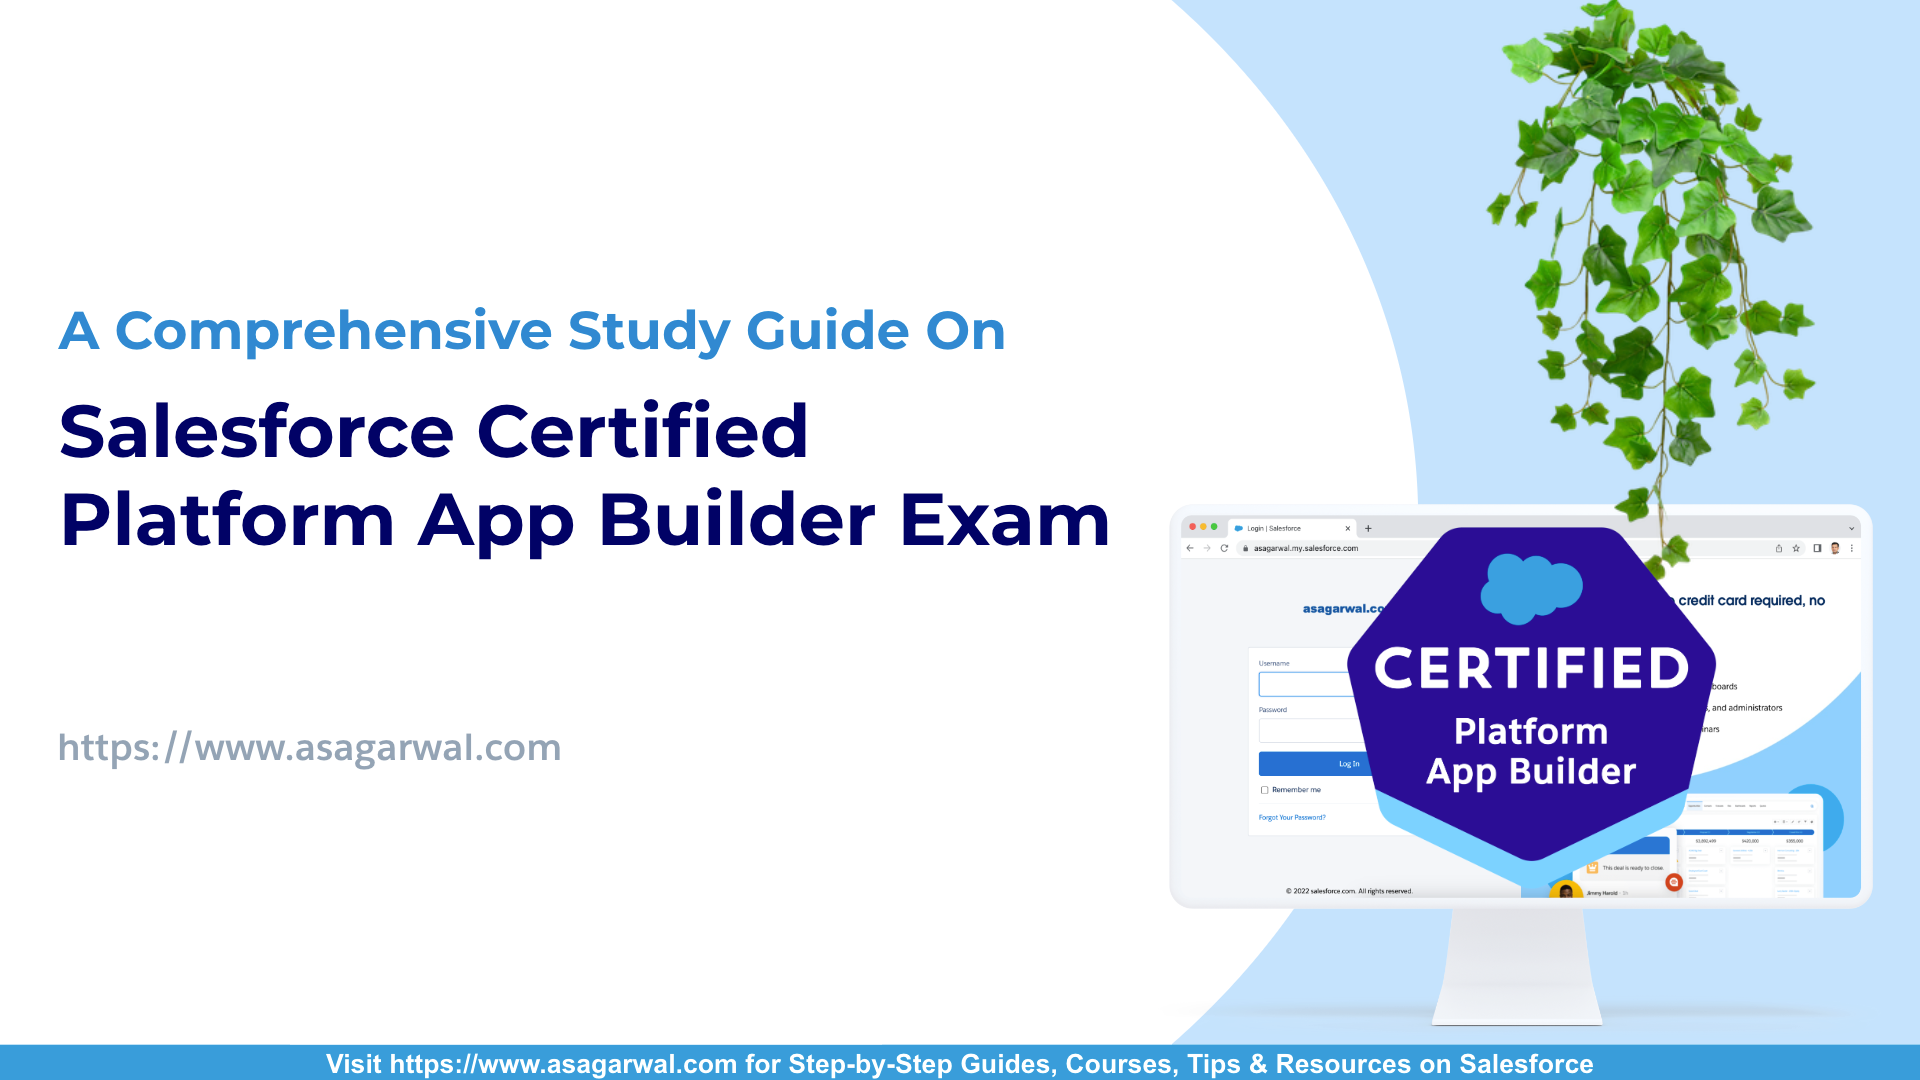 A Comprehensive Study Guide On Salesforce Certified Platform App Builder Exam